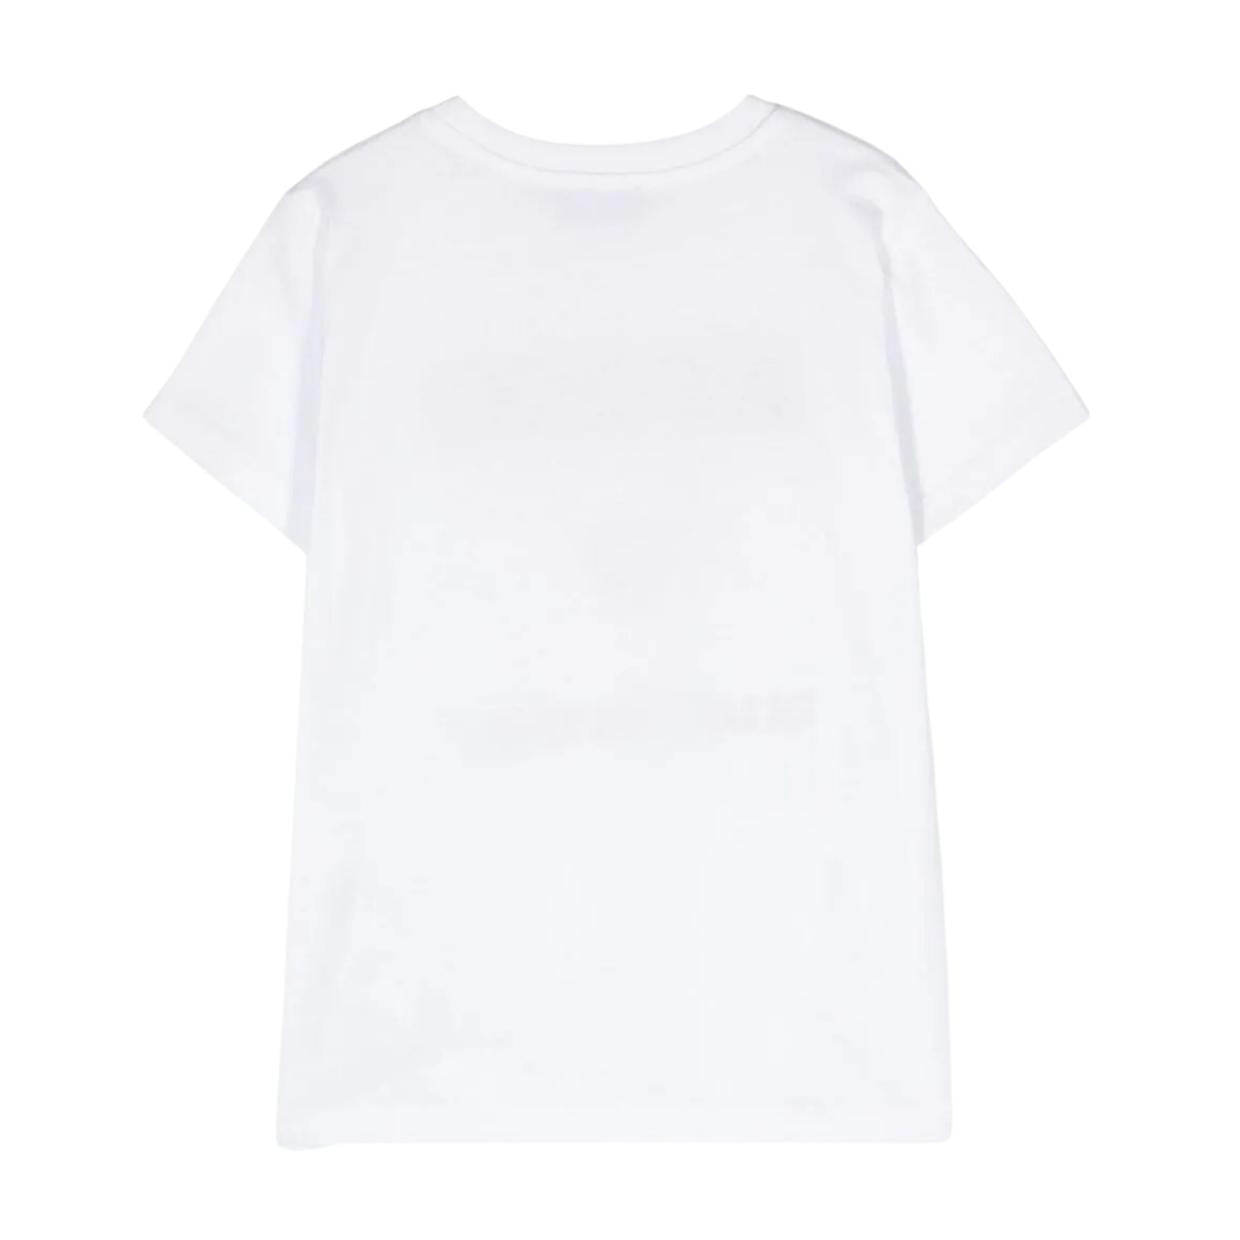 Moschino Kids Embroidered Logo White T-Shirt